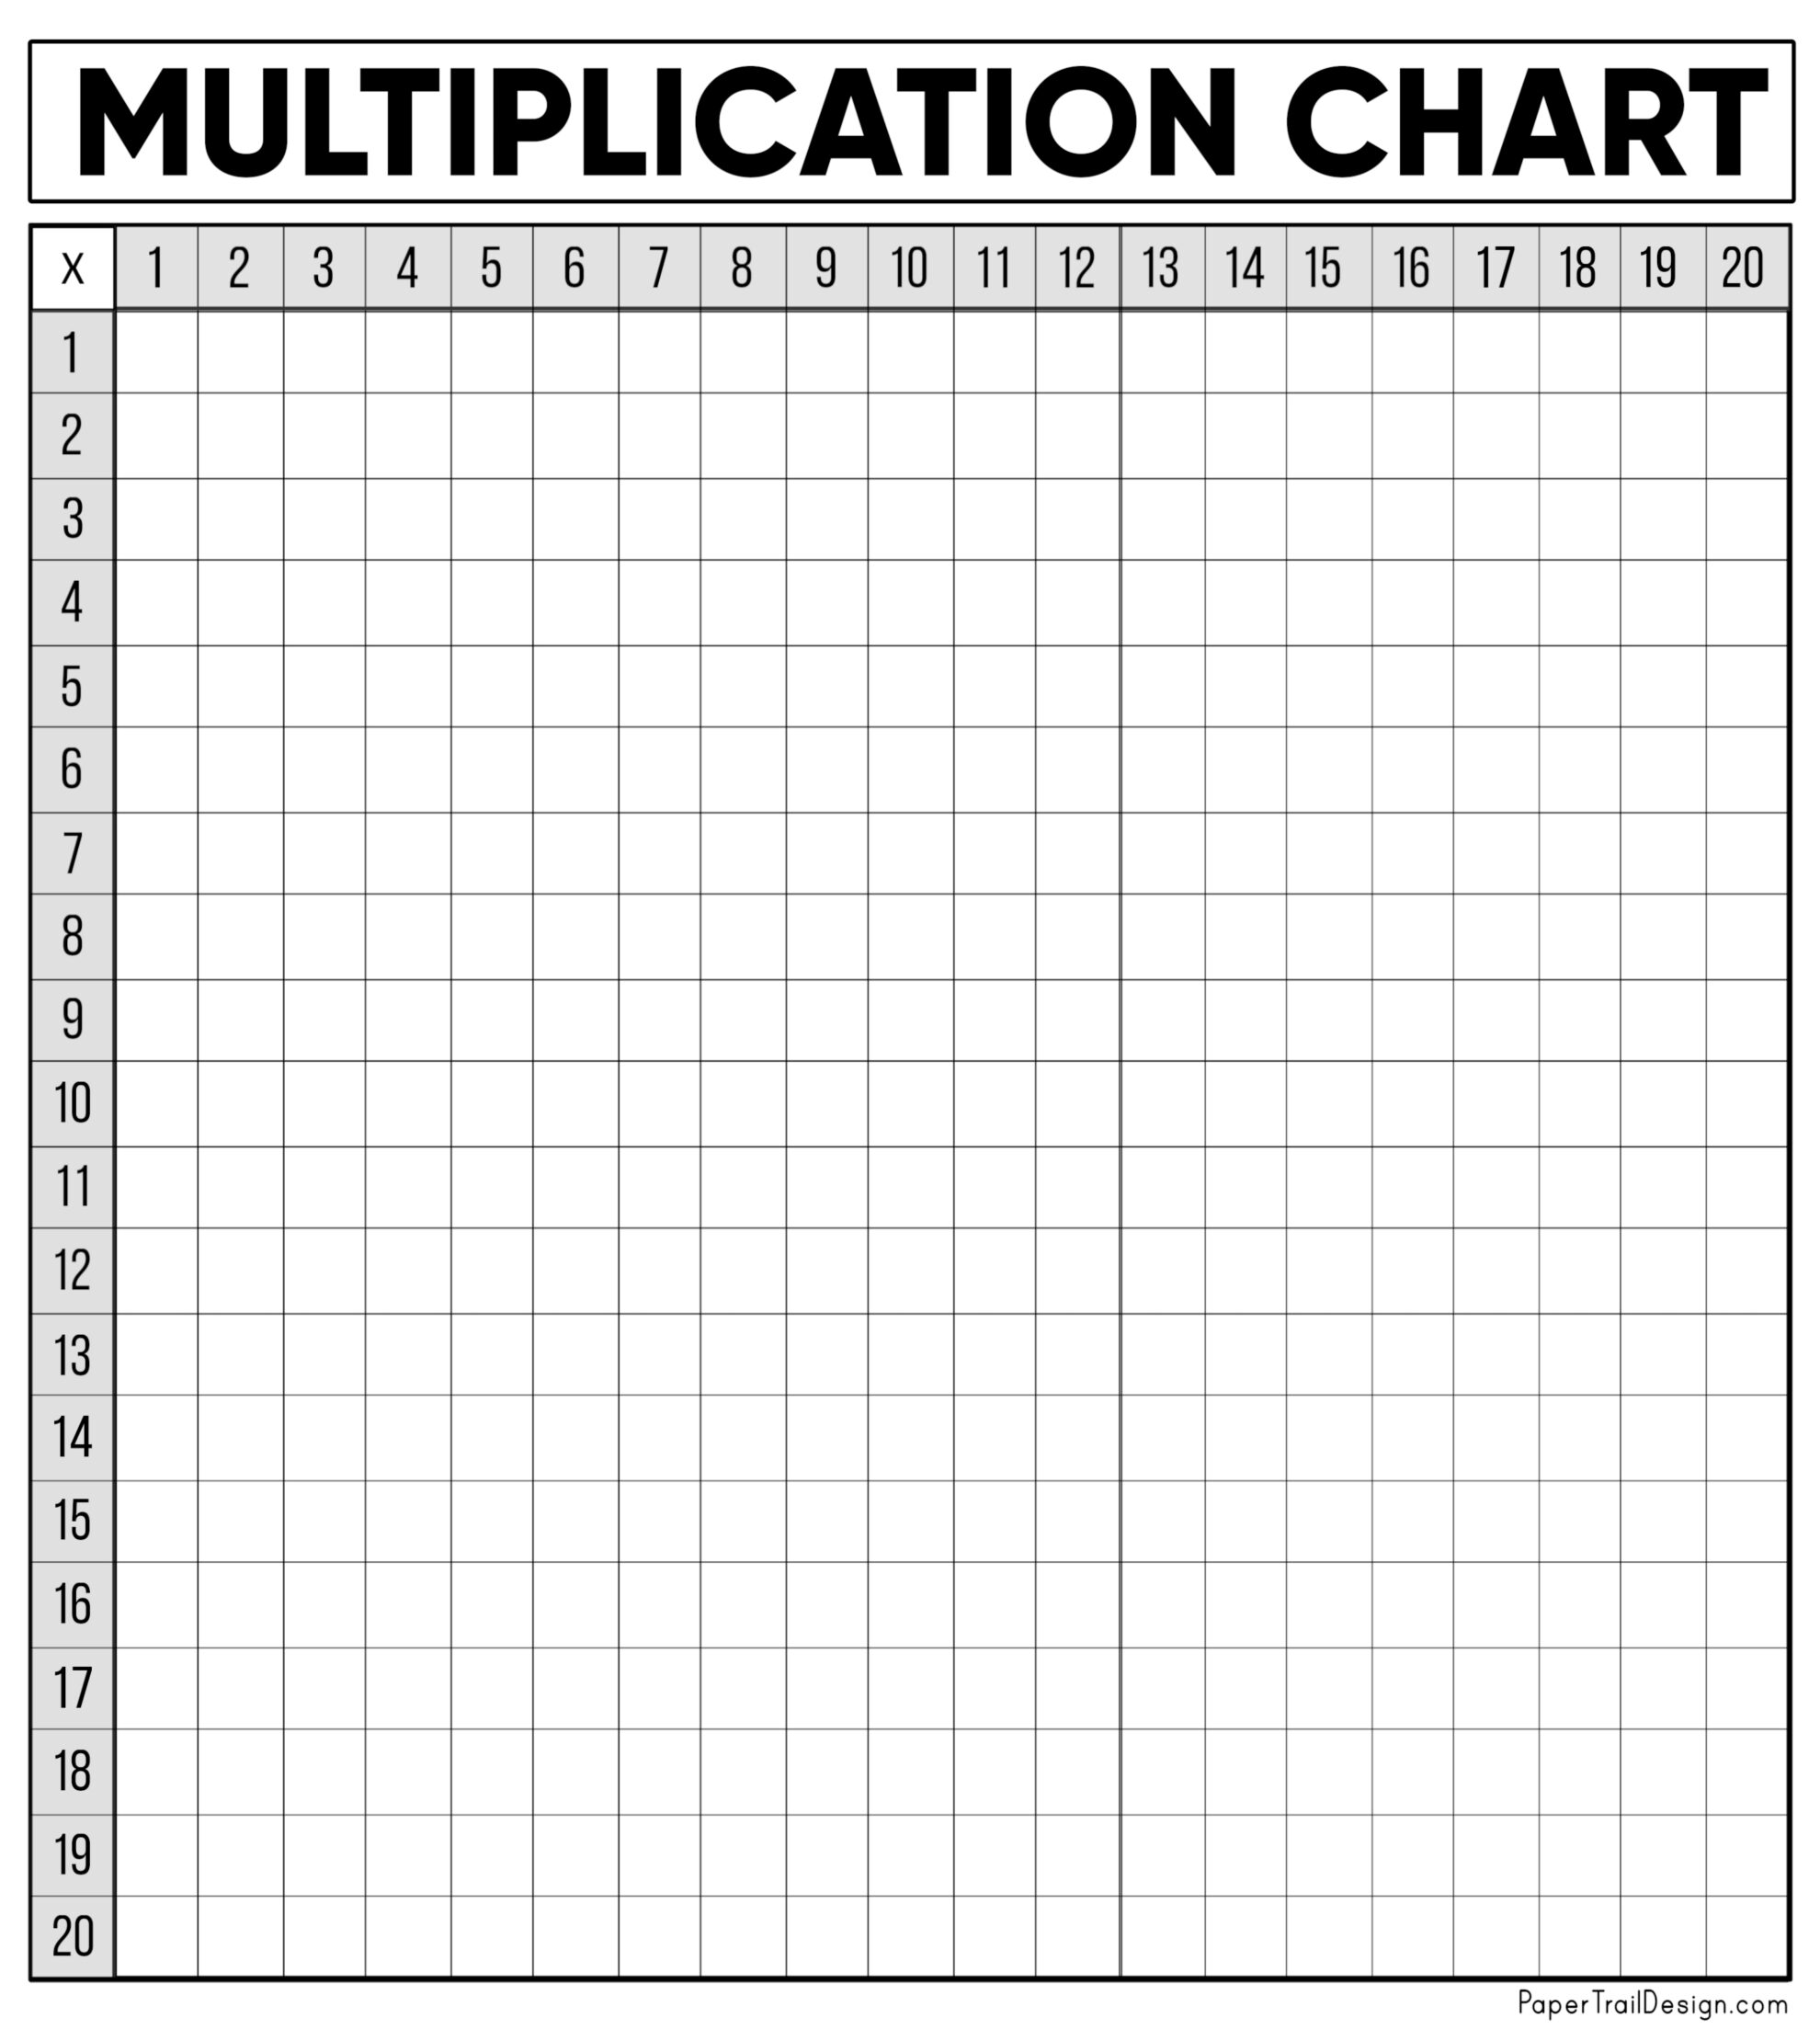 multiplication-blank-chart-printable-customize-and-print